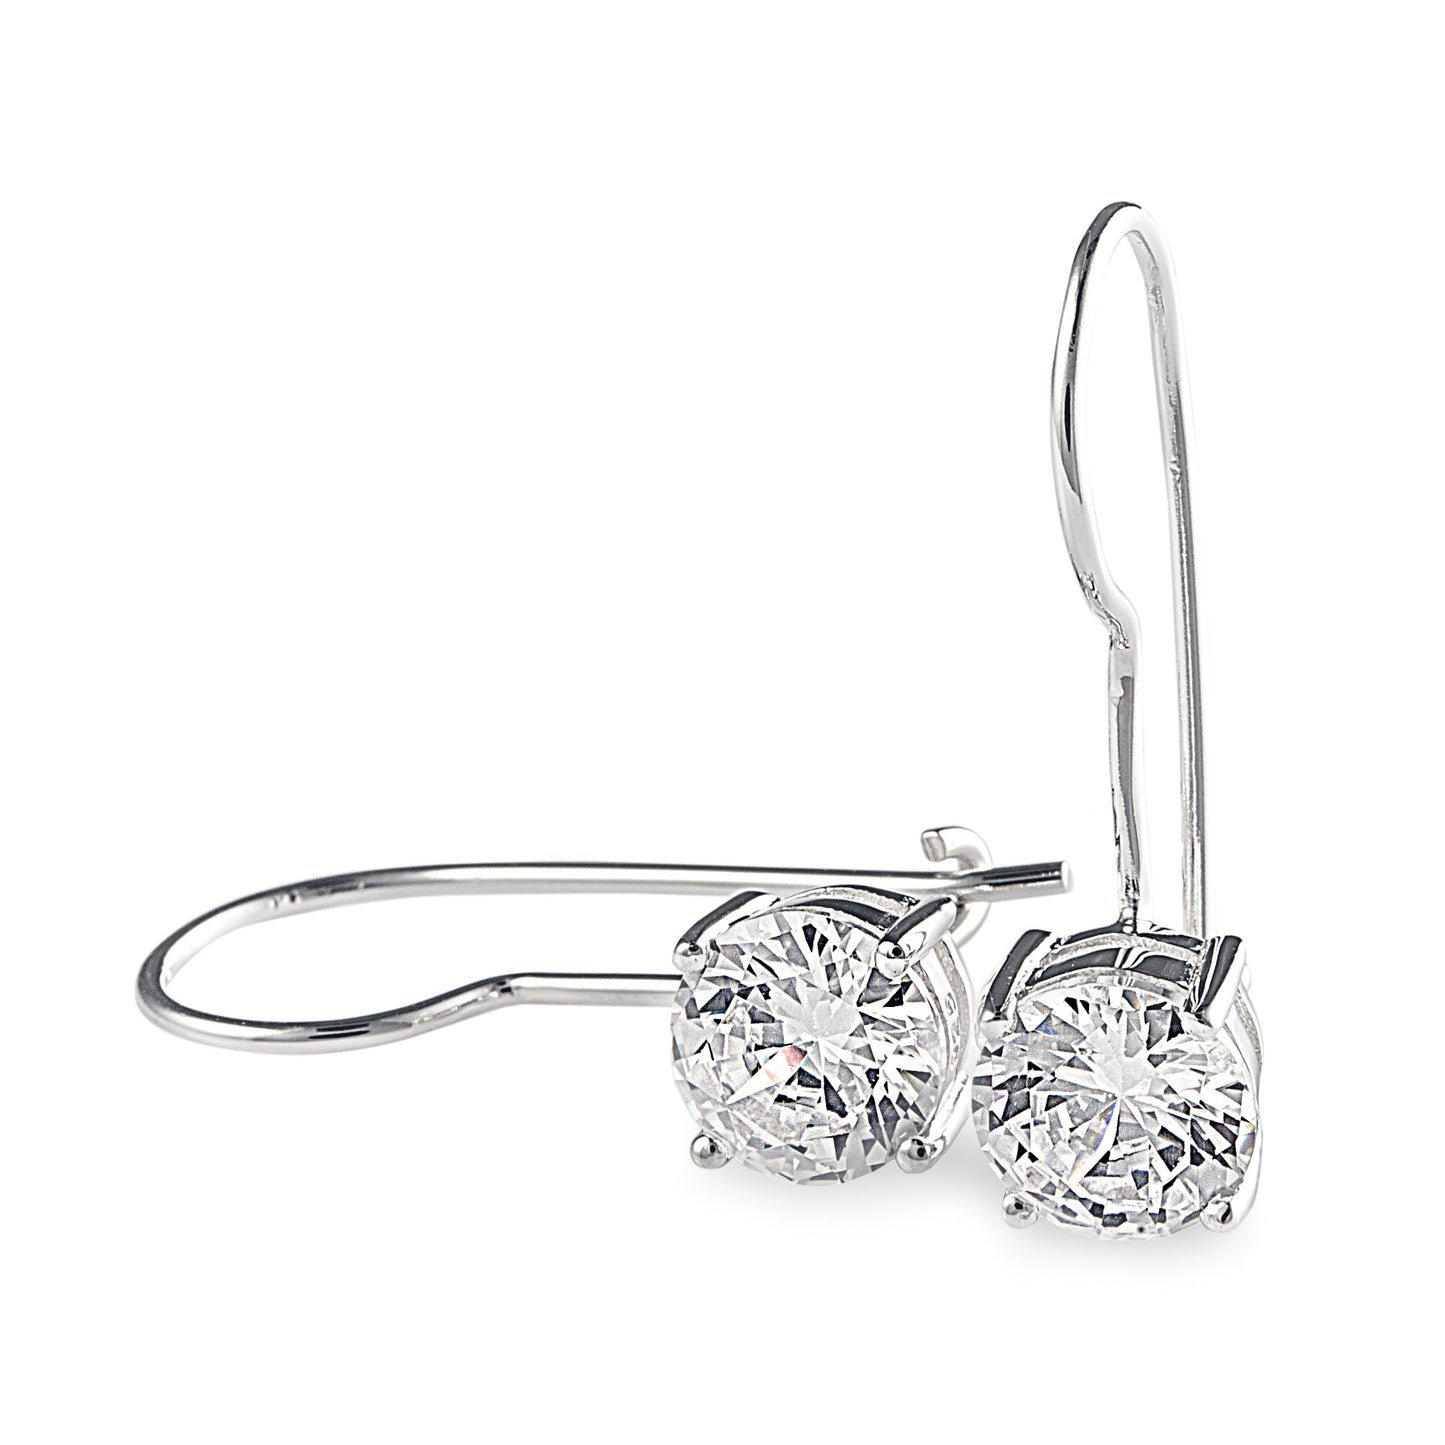 Drop Earrings: Glamour Drop Rocks - in 925 Sterling Silver with 3 Carat Cubic Zirconia Stones. Worldwide shipping. Luxury jewellery by Bellagio & Co.